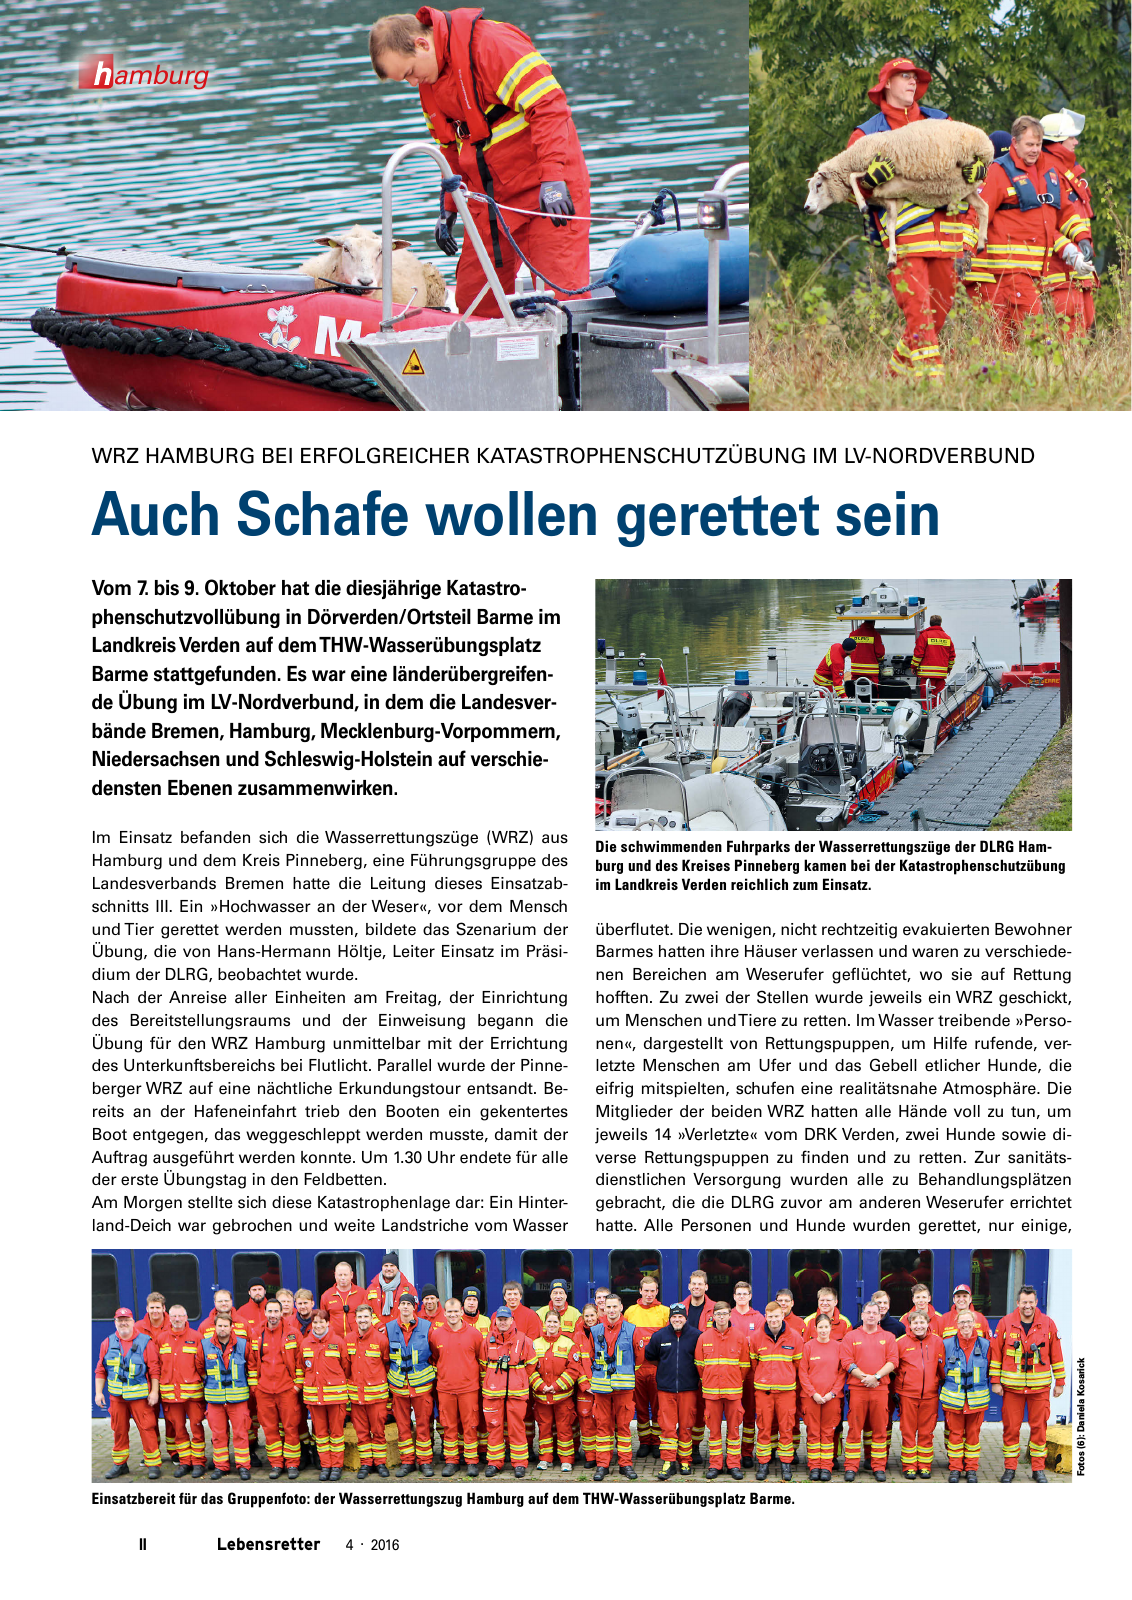 Vorschau Lebensretter 4/2016 - Regionalausgabe Hamburg Seite 4